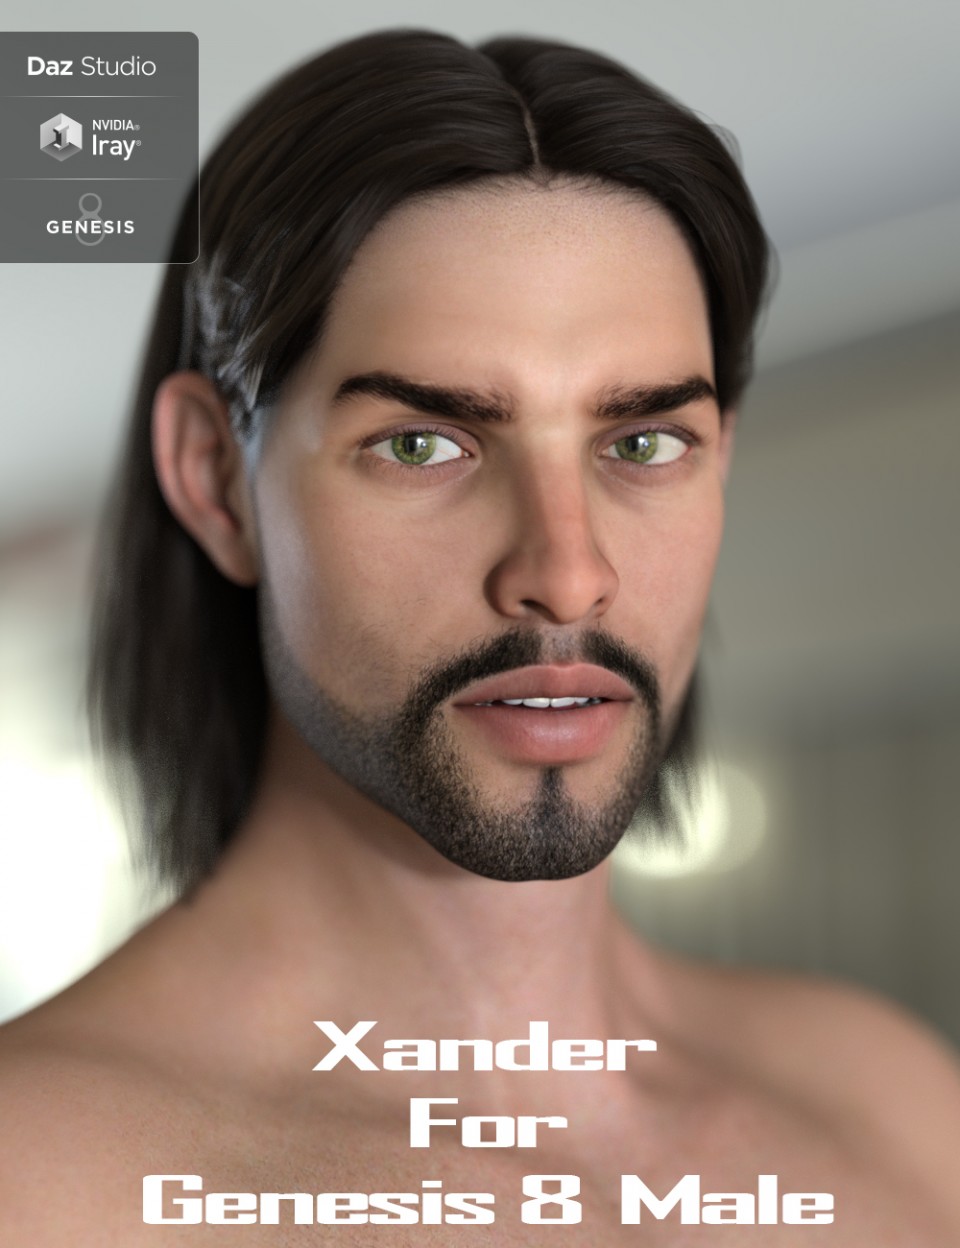 Xander for Genesis 8 Male